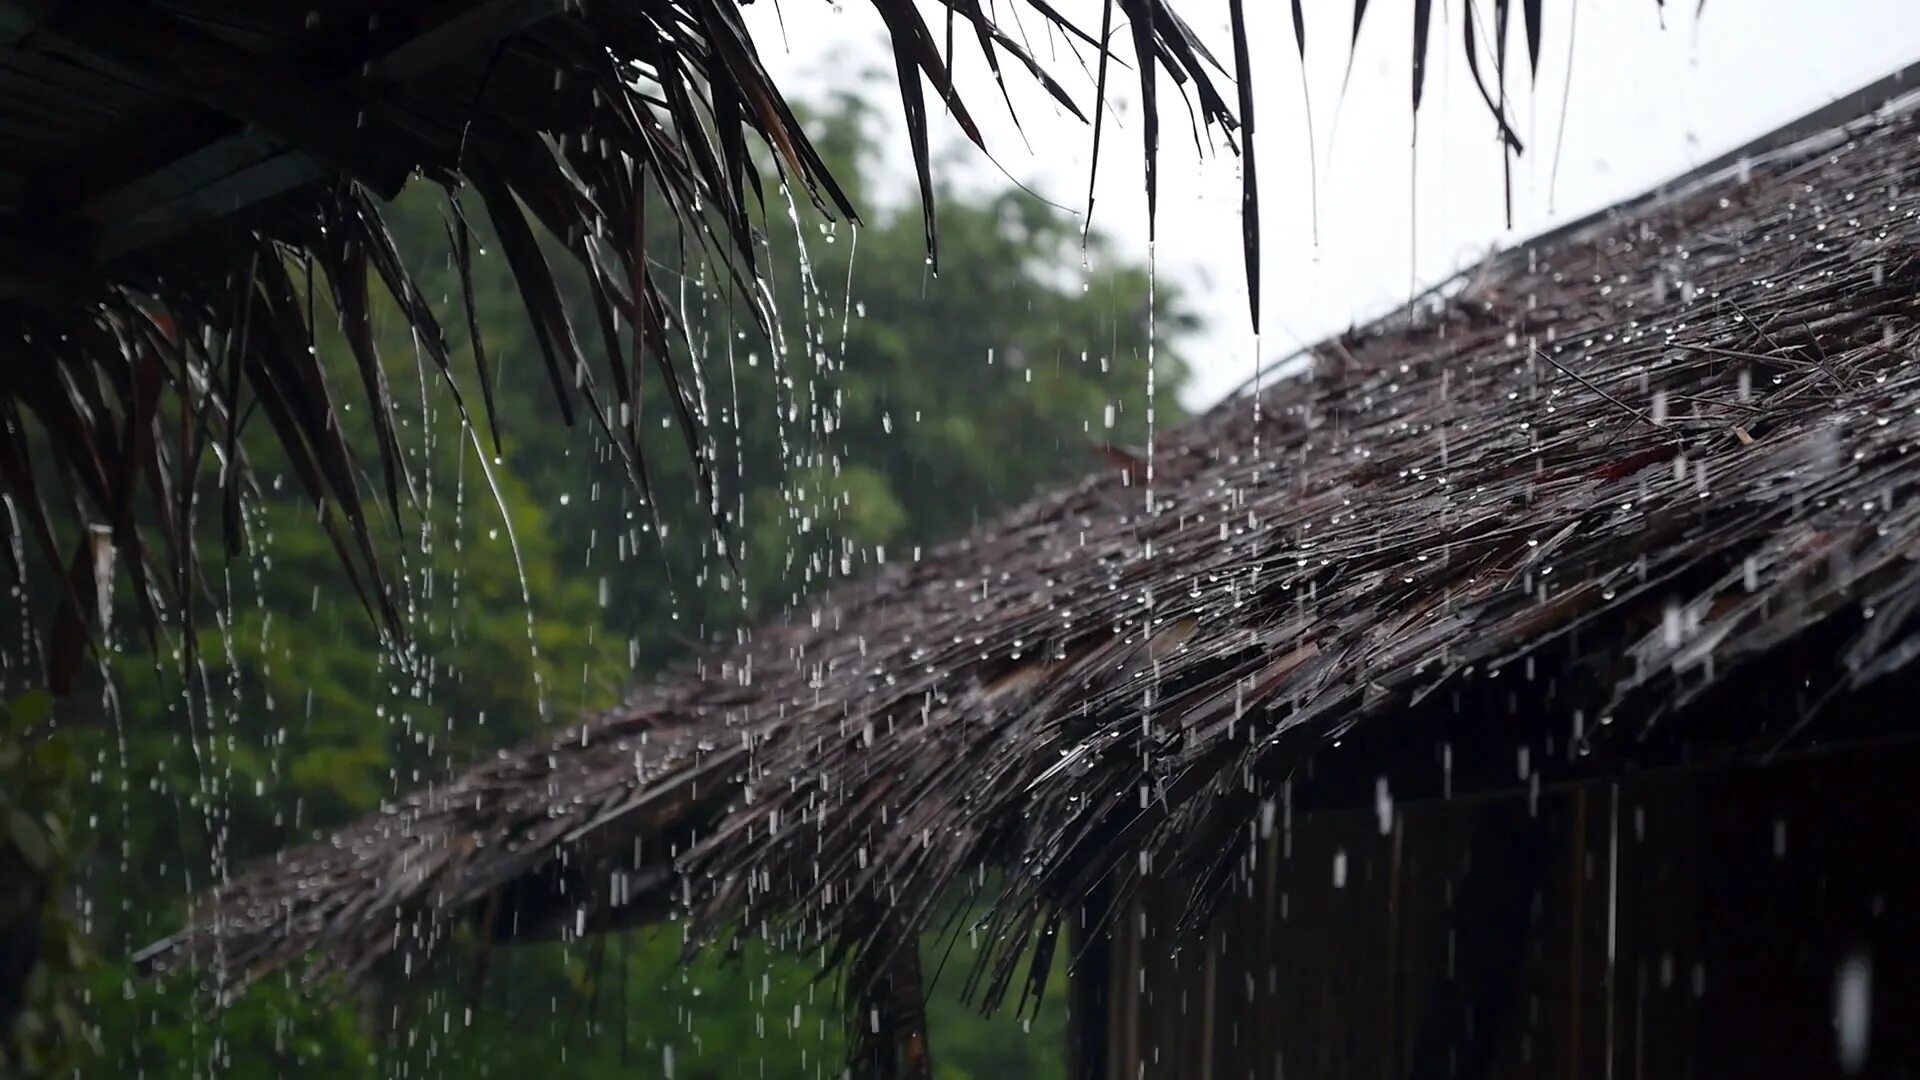 Rain damage. Ливневый тропический дождь. Тропический ливень. Дождь в тропиках. Дождь в тропическом лесу.